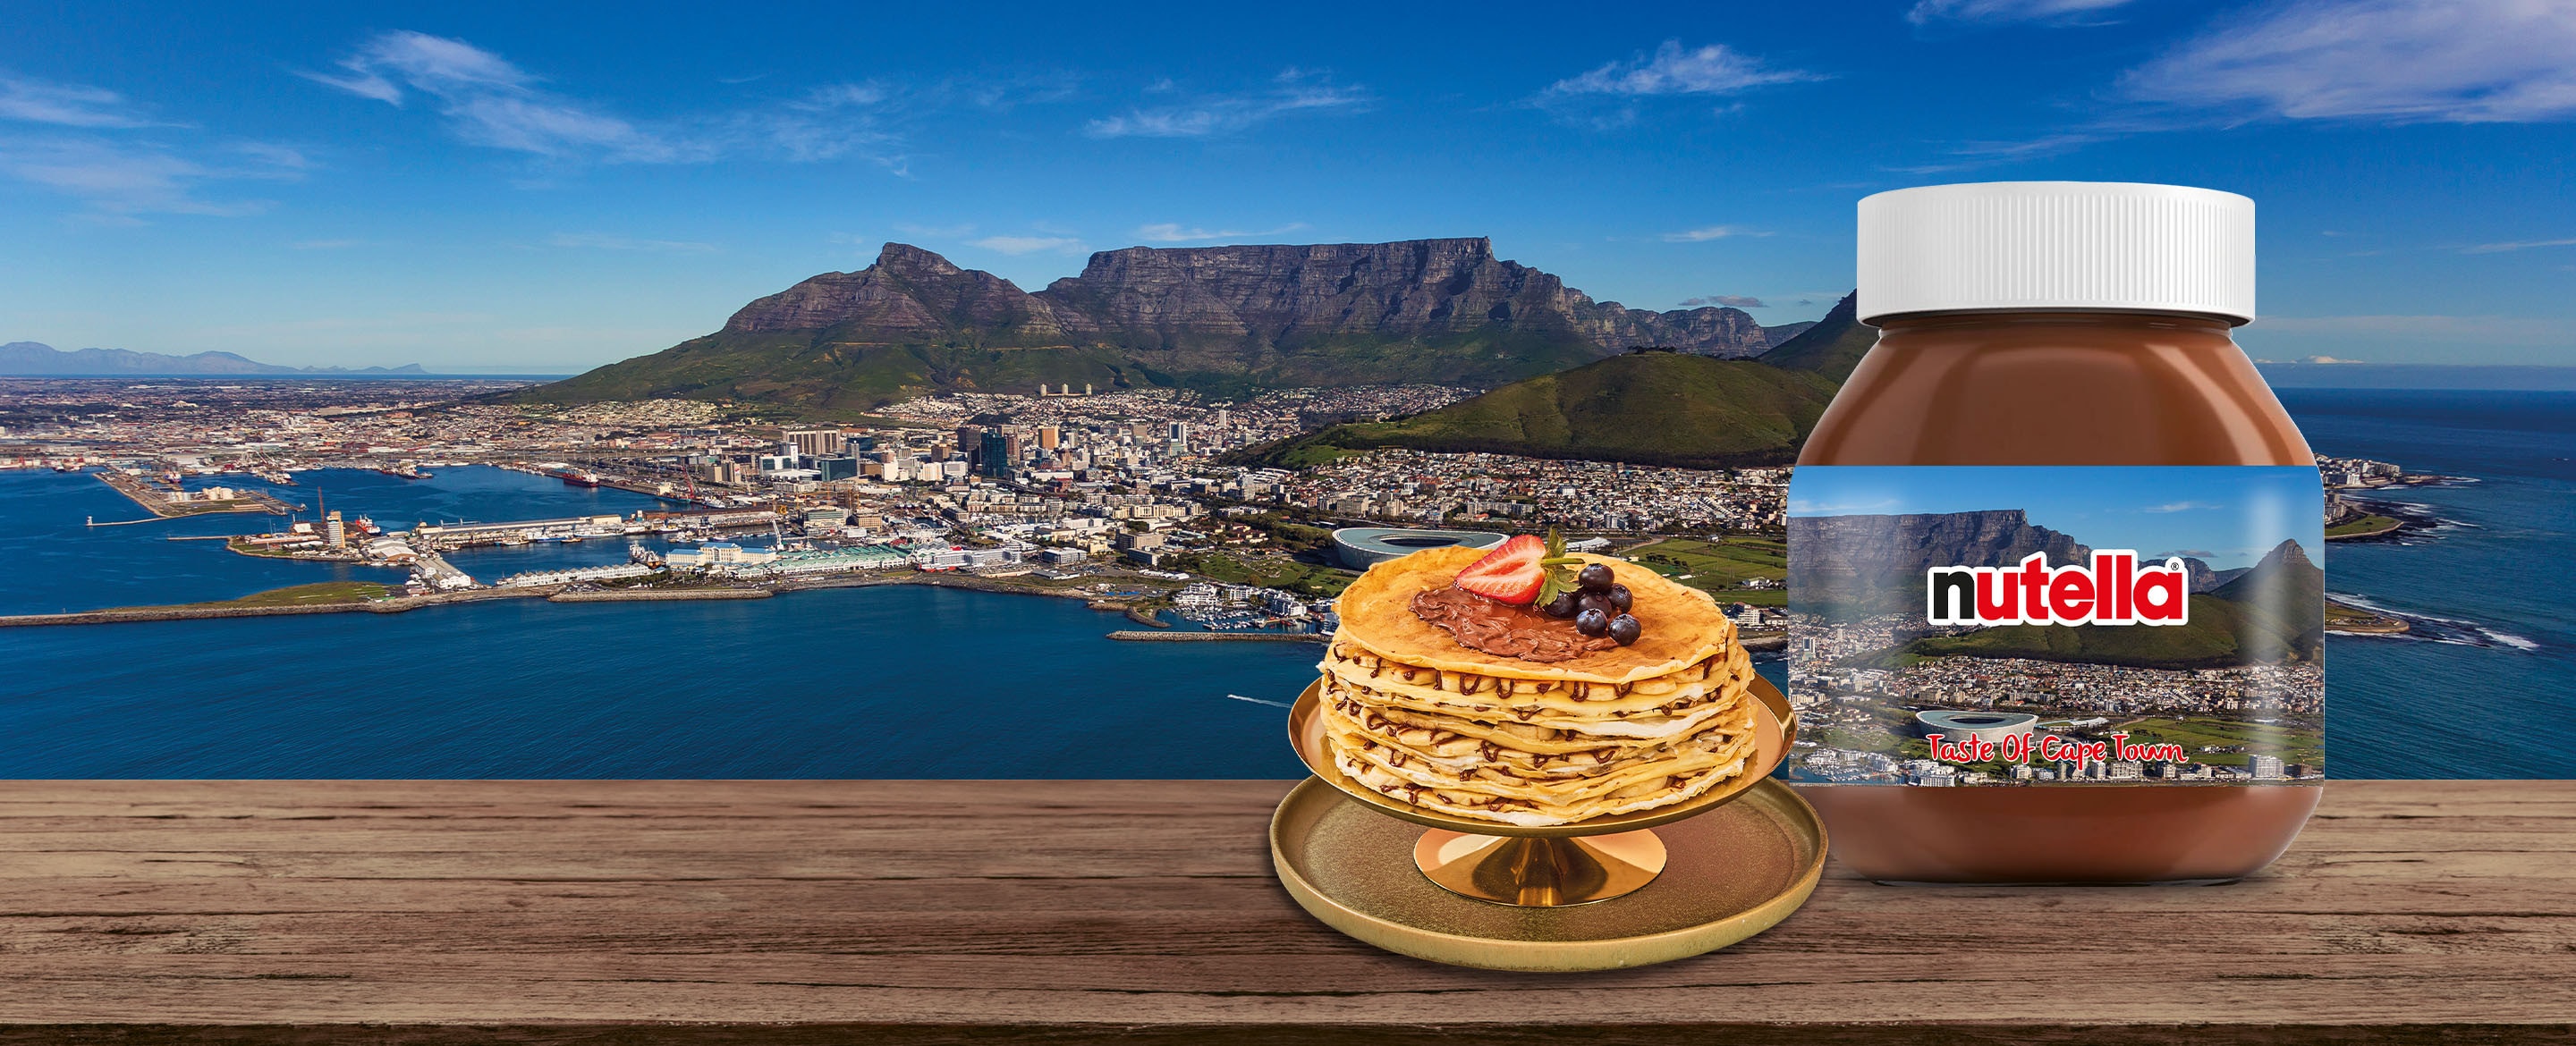 Get a taste of Cape Town